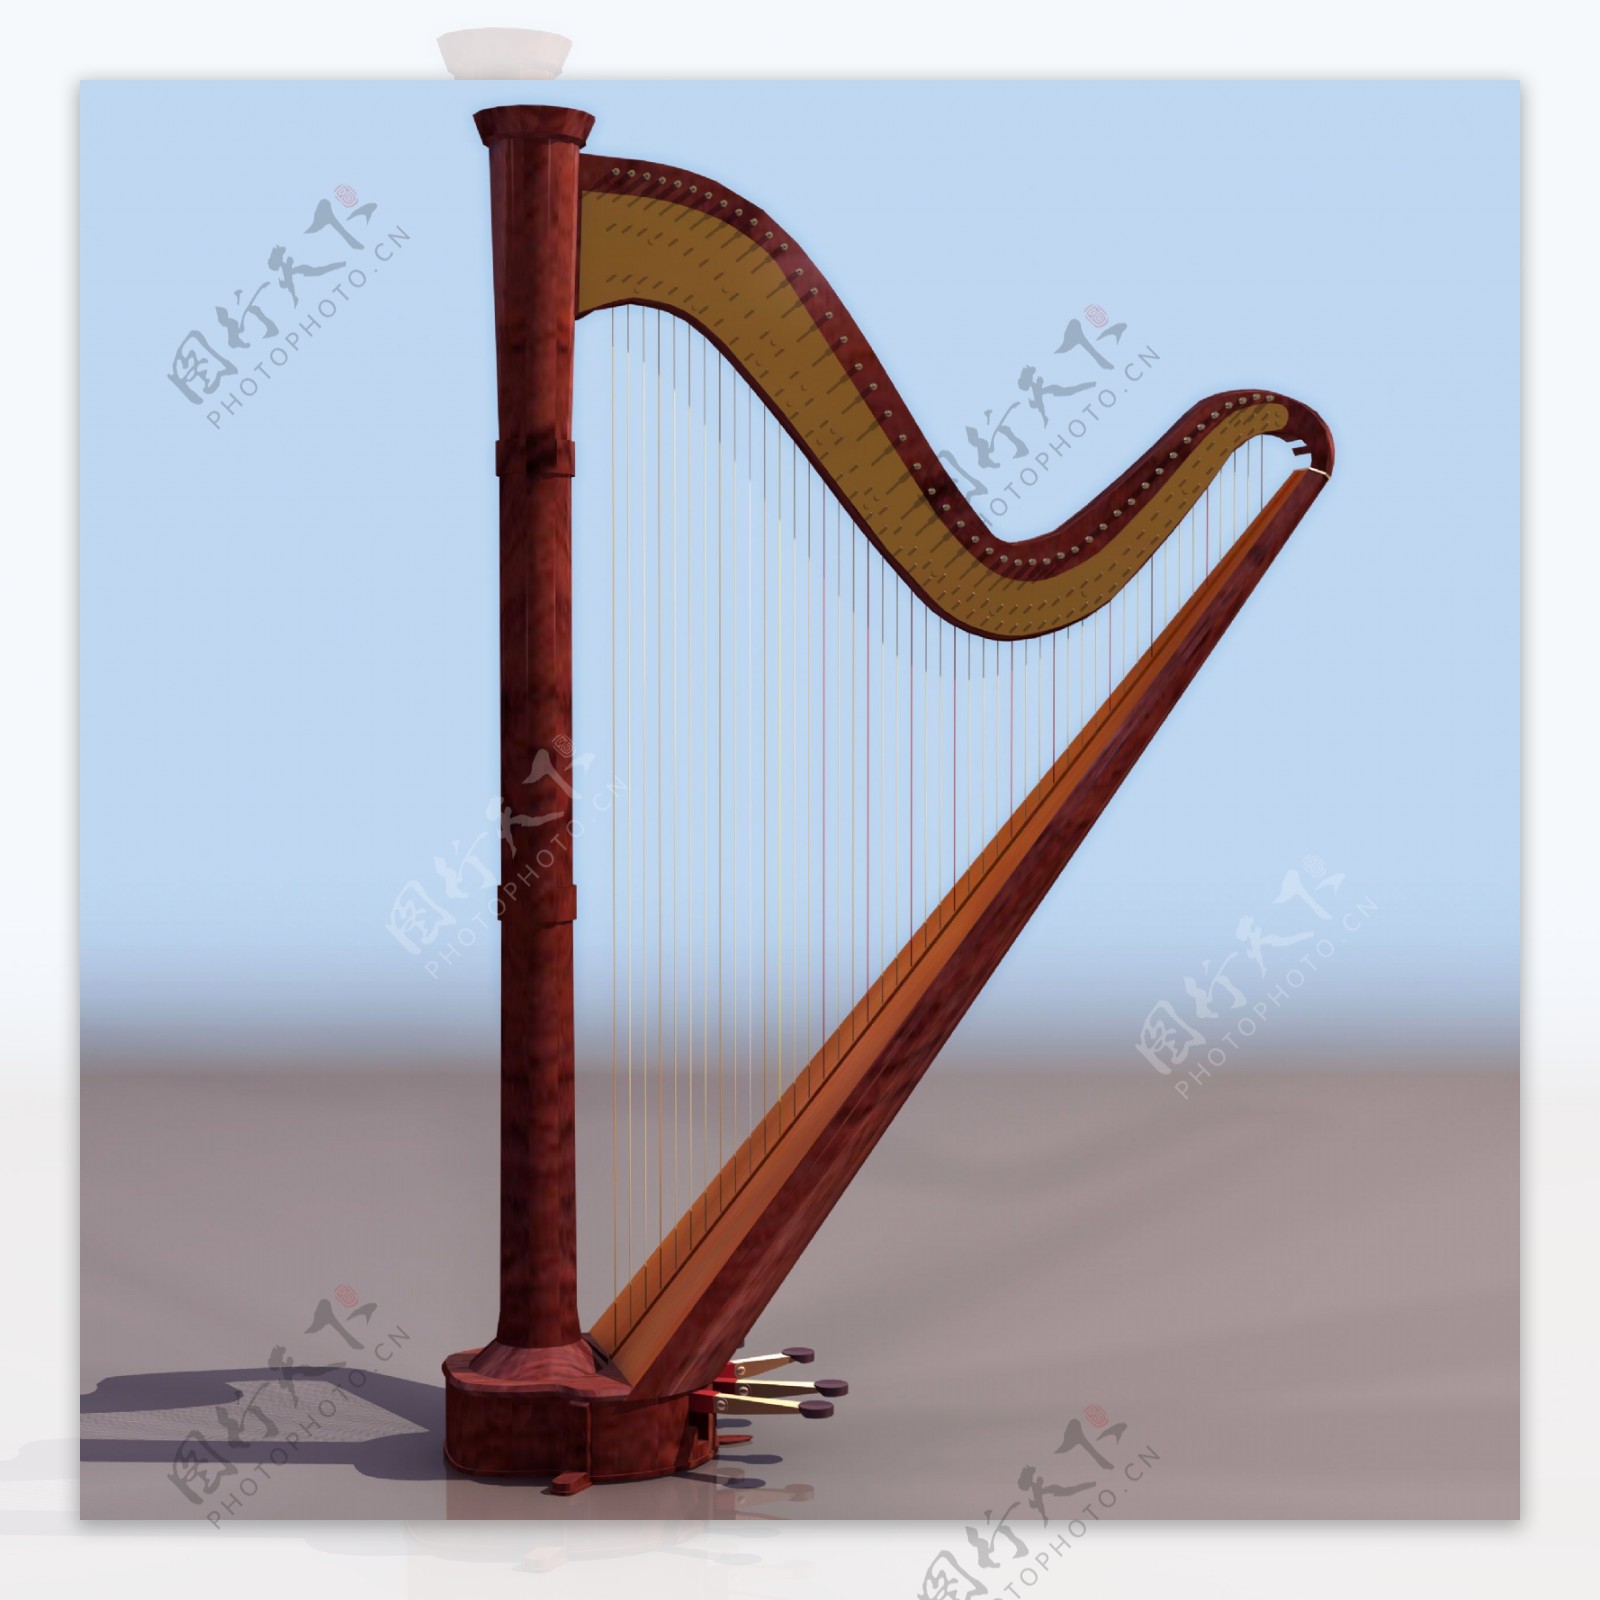 ARPA竖琴乐器模型01